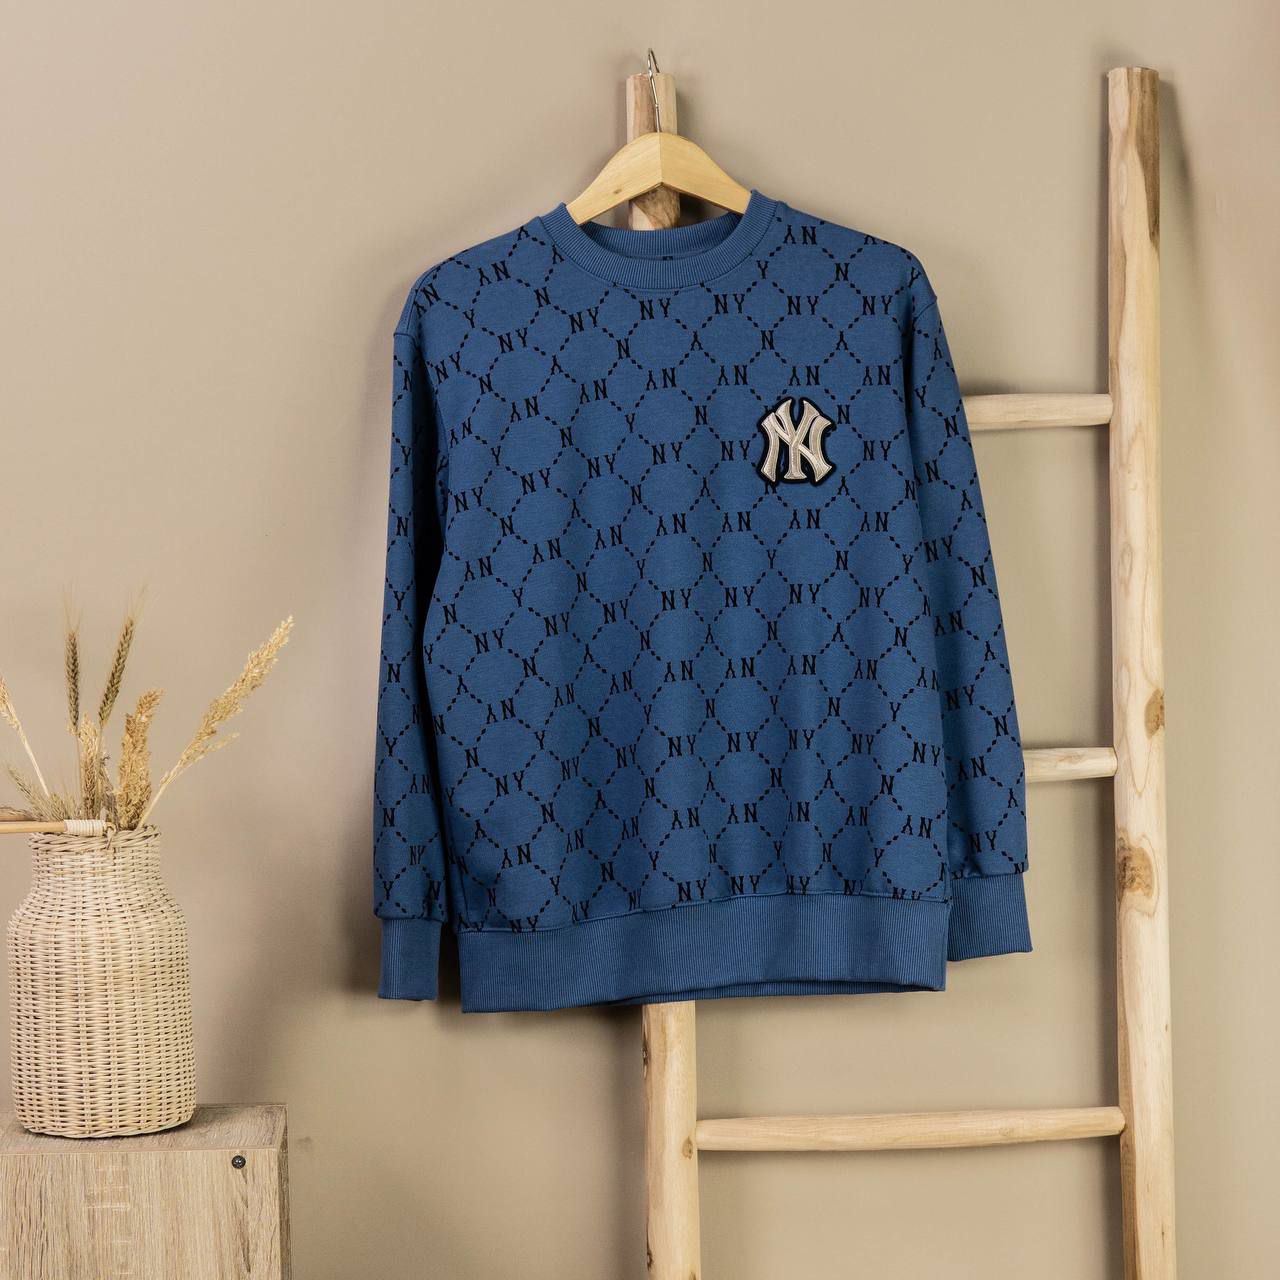 Sweater MLB NY MONOGRAM BLUE SWEATSHIRT 100% ORIGINAL - HYPESNEAKER.ID